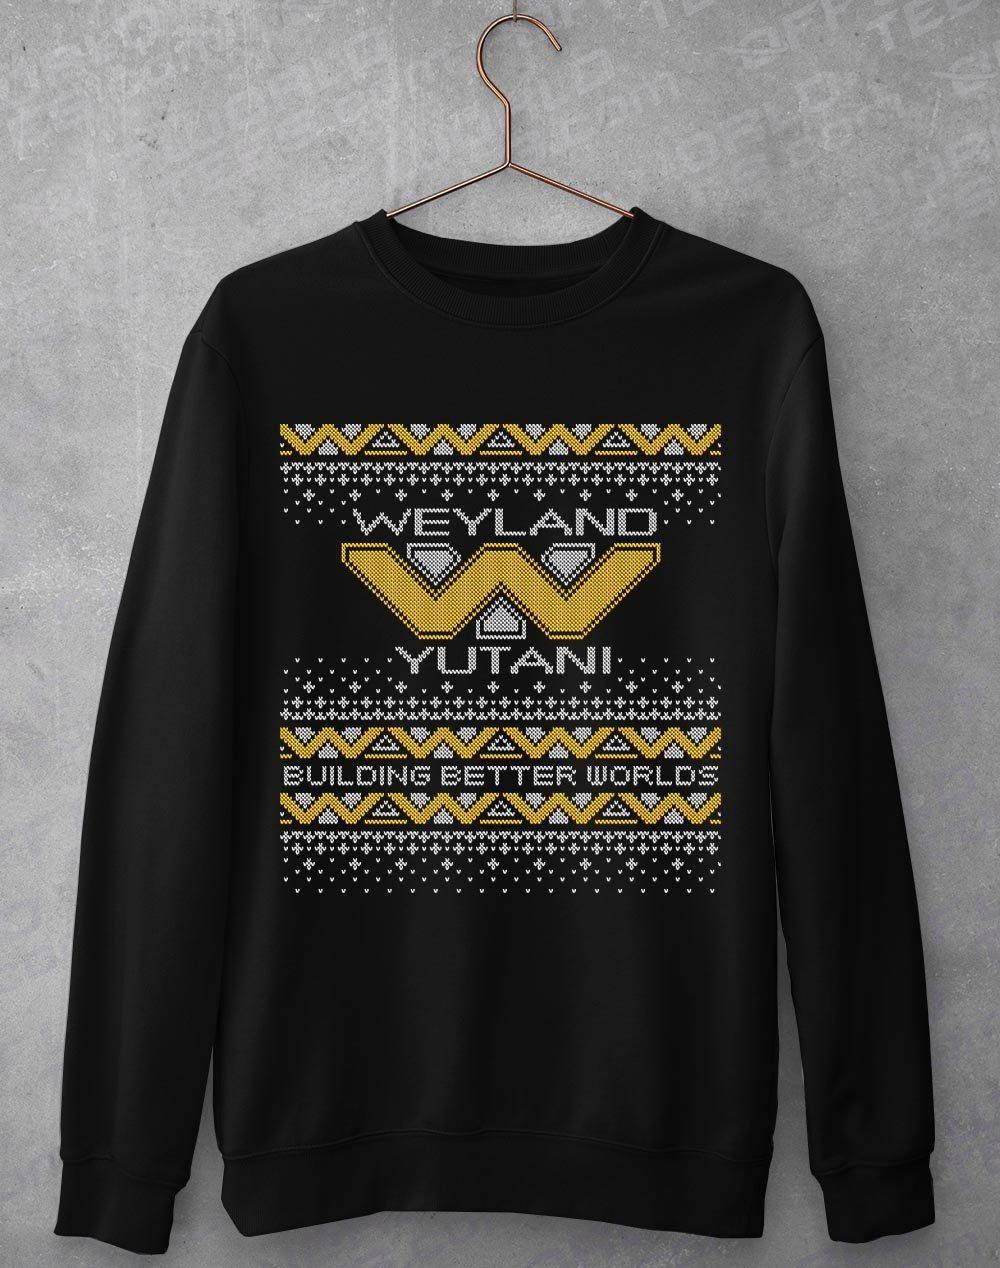 Weyland Yutani Festive Knitted-Look Sweathirt S / Black  - Off World Tees